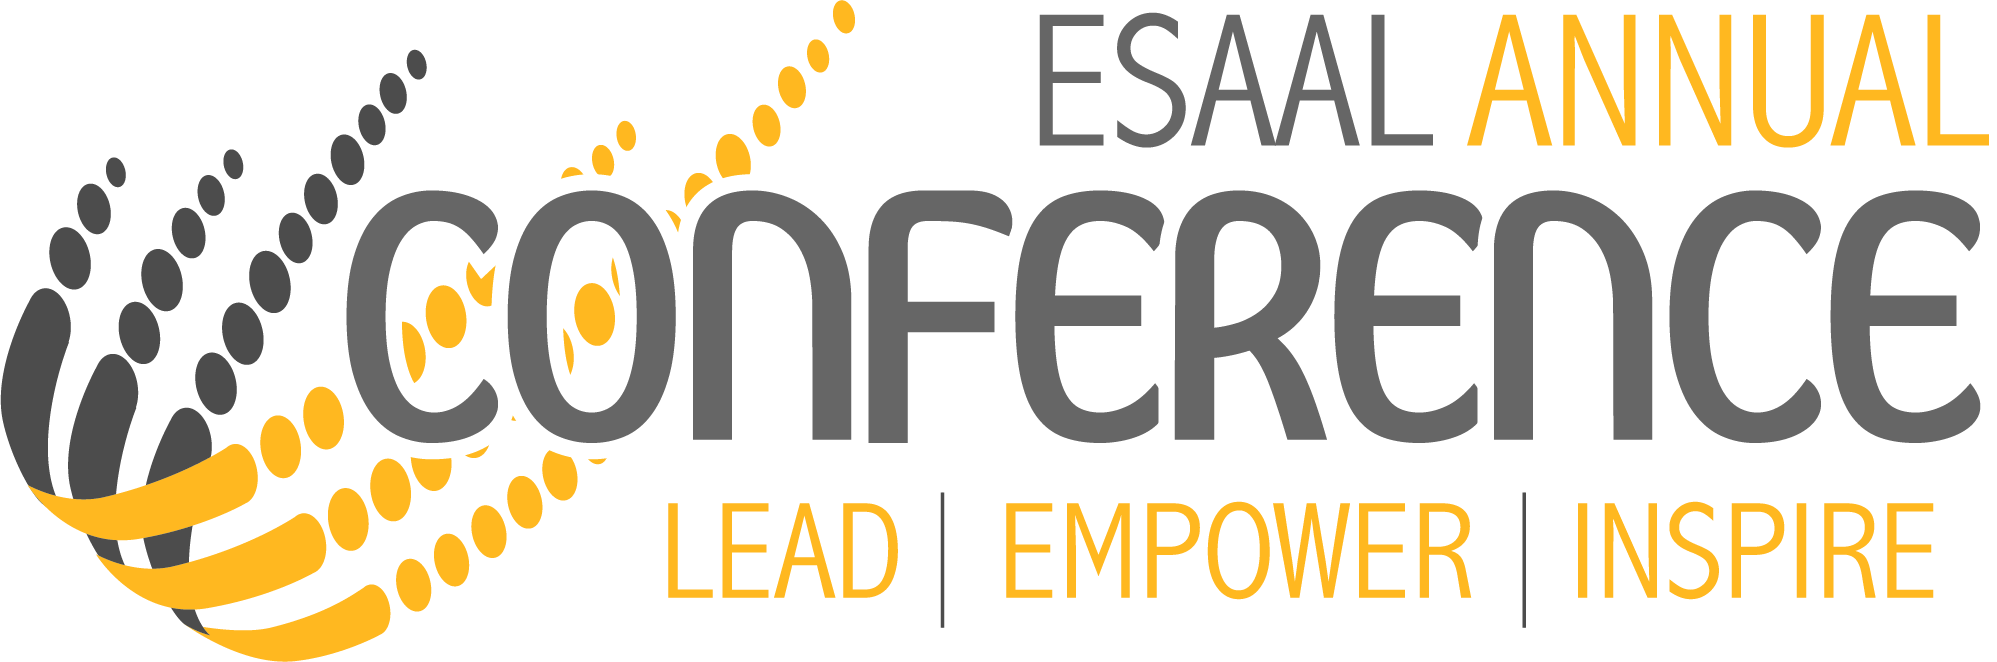 Esaal Conference Logo-1